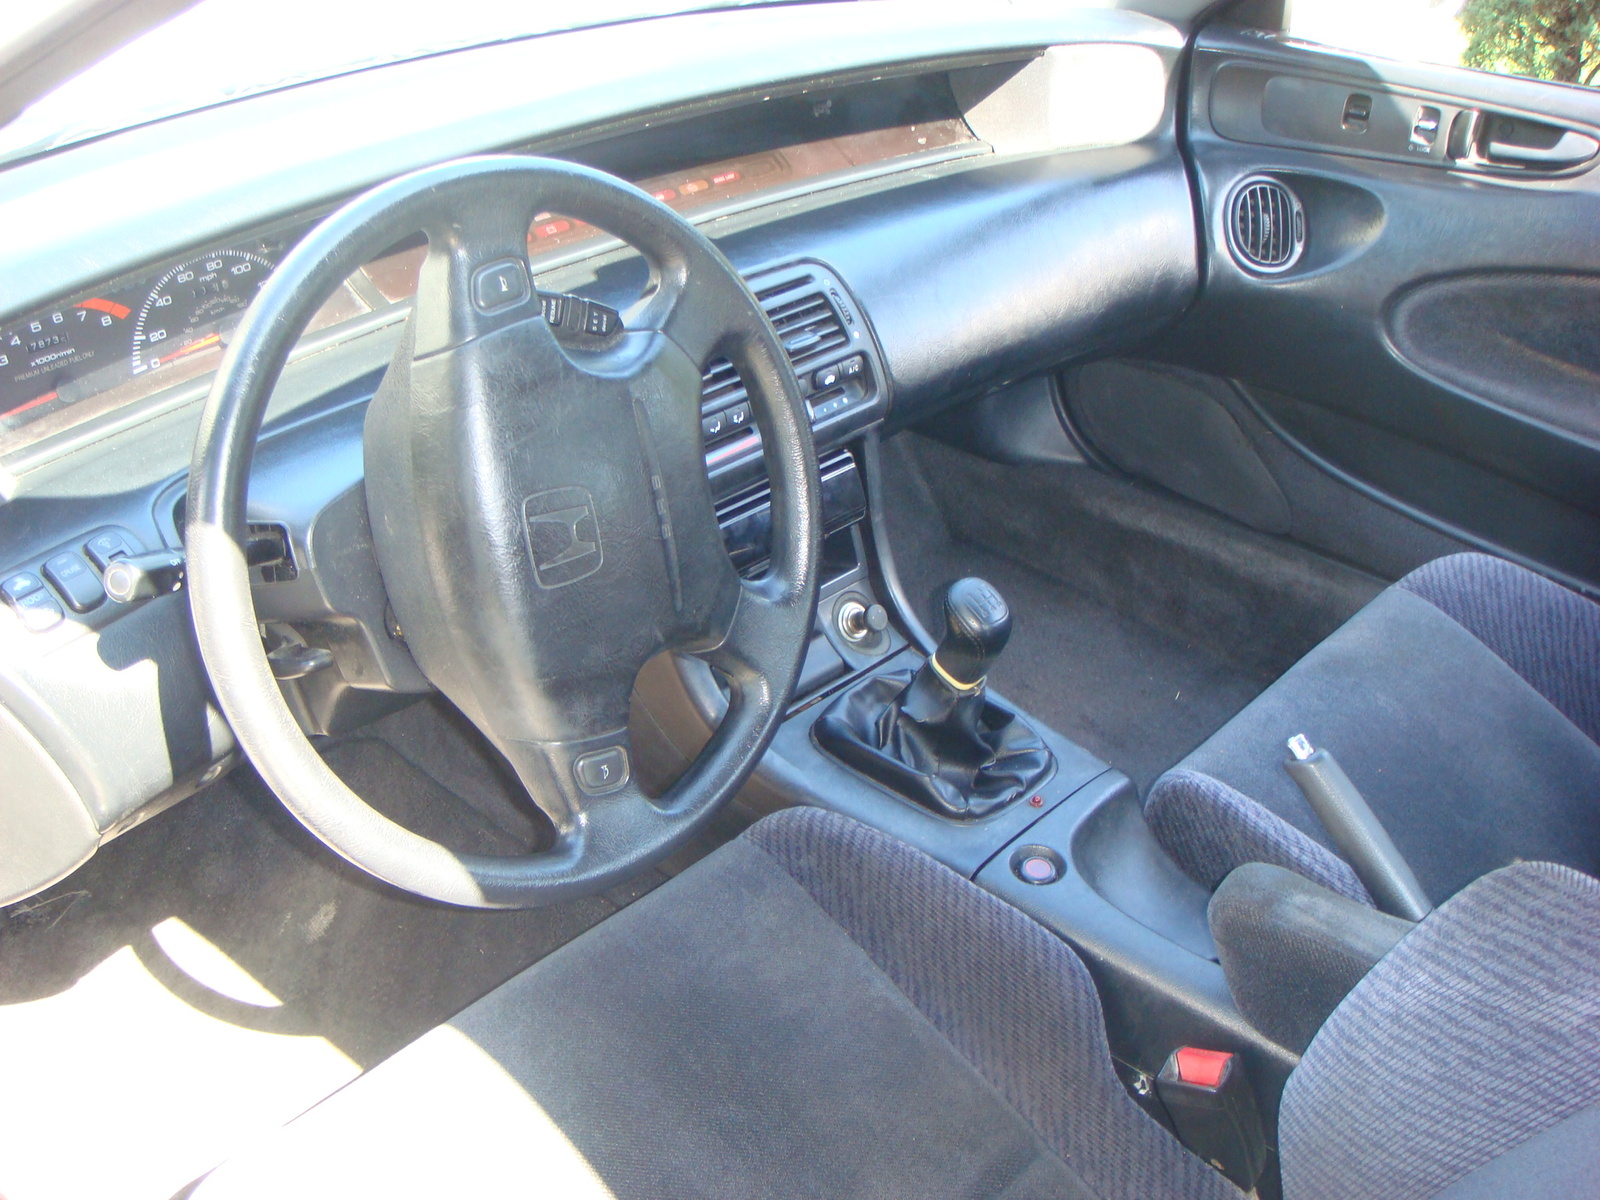 1992 Honda prelude interior pictures #5